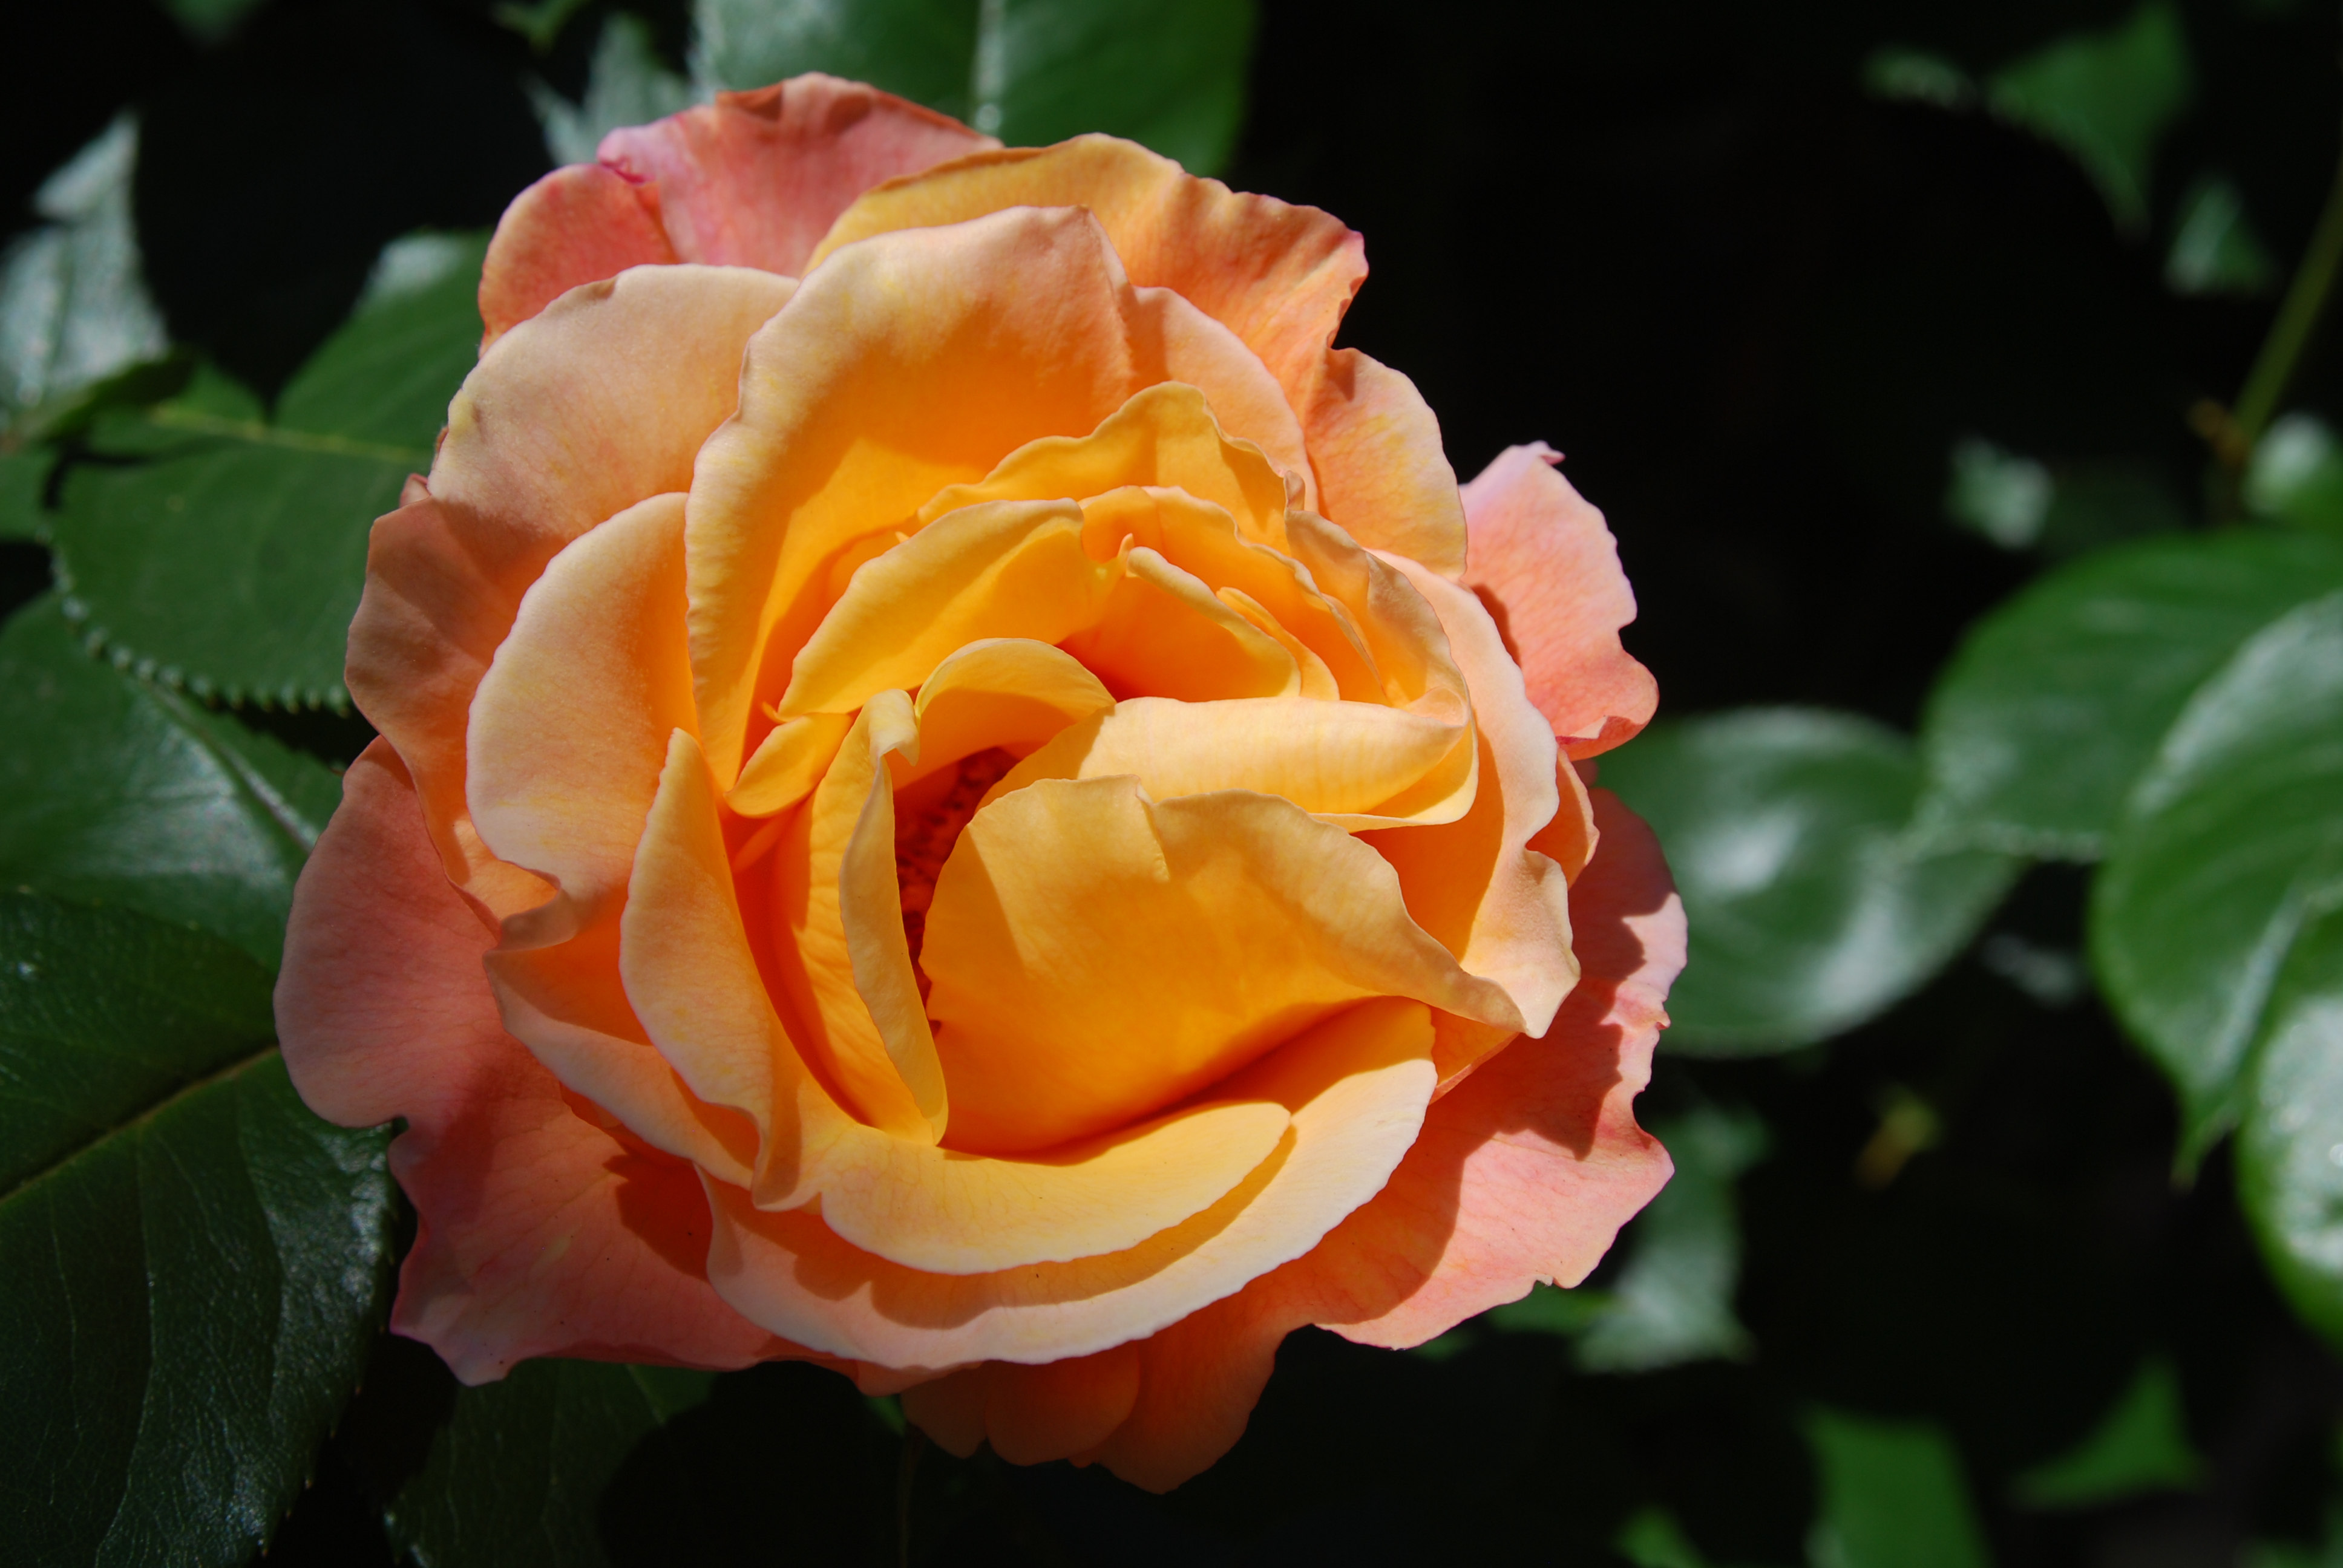 Orange rose, Kelley's "Hellstrip Garden" in Goose Hollow, Portland, Oregon May, 2021.